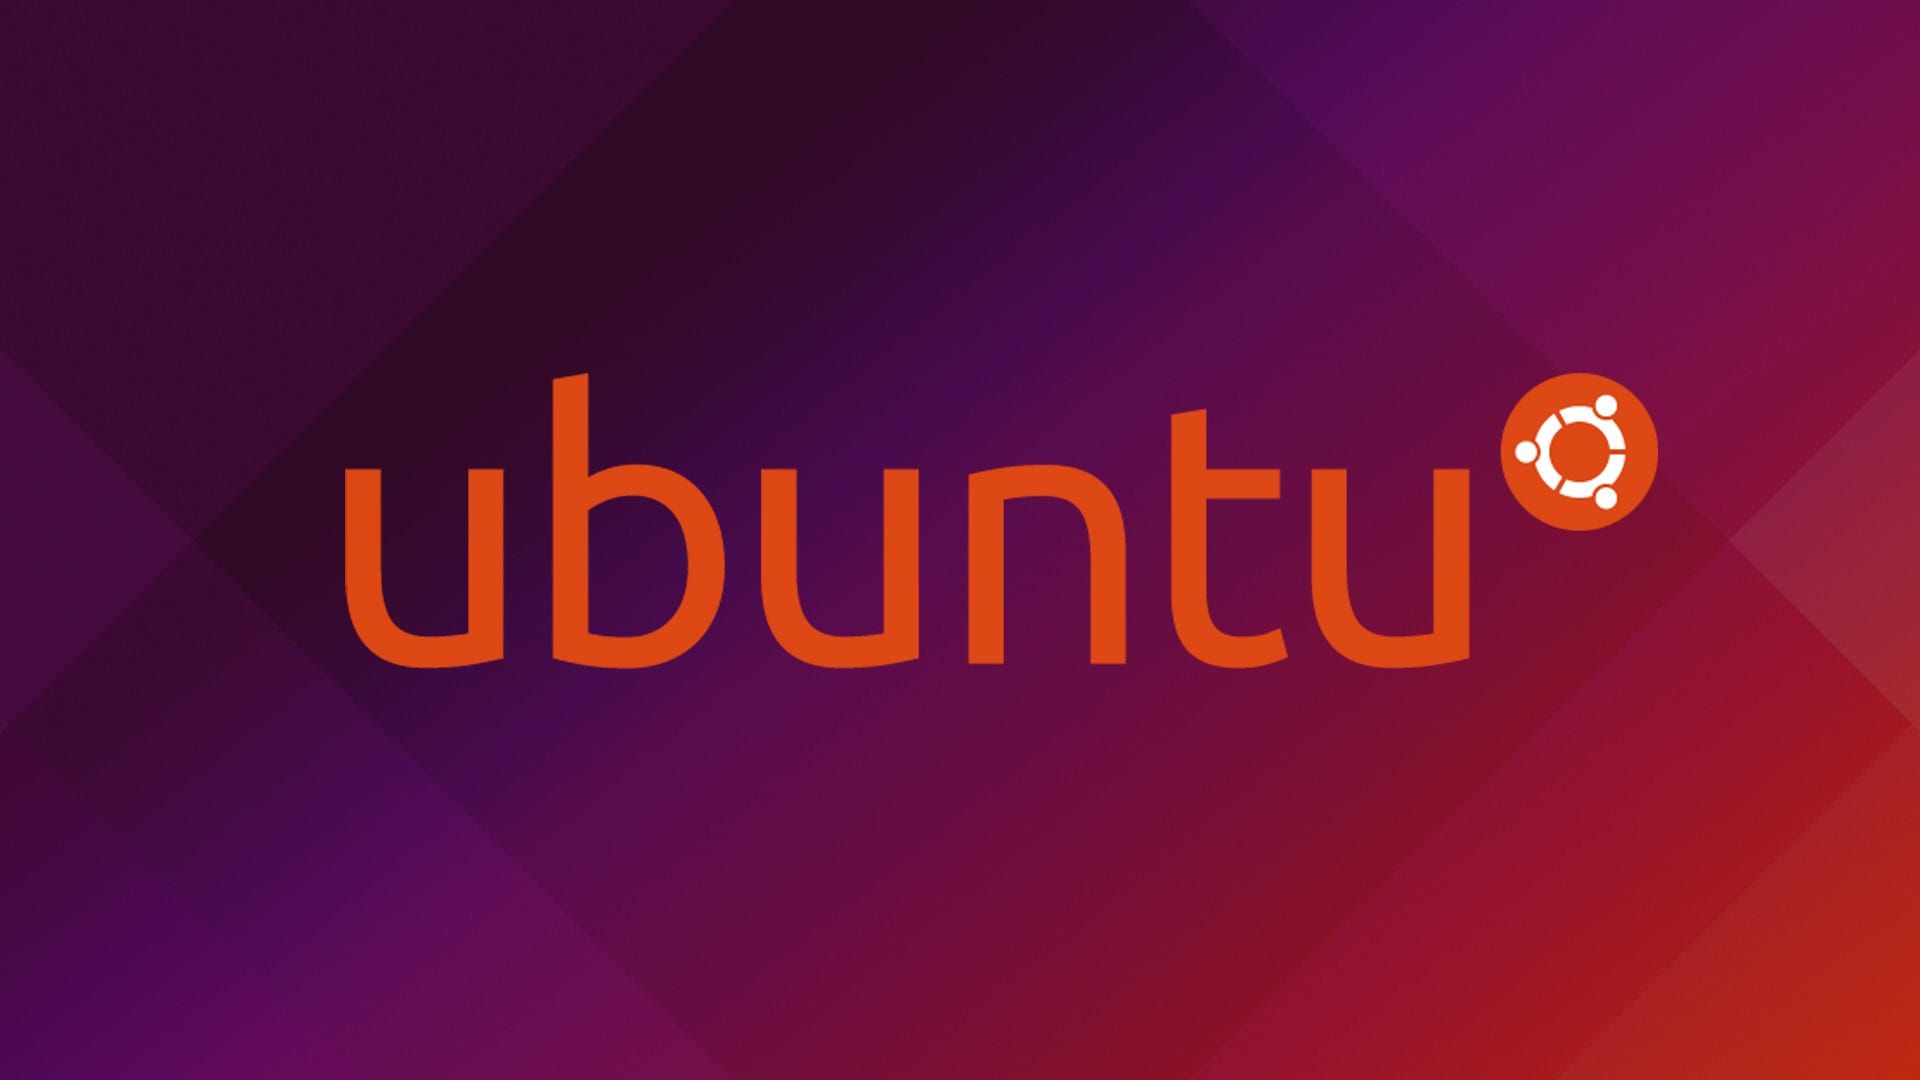 Ubuntu logo on gradient background